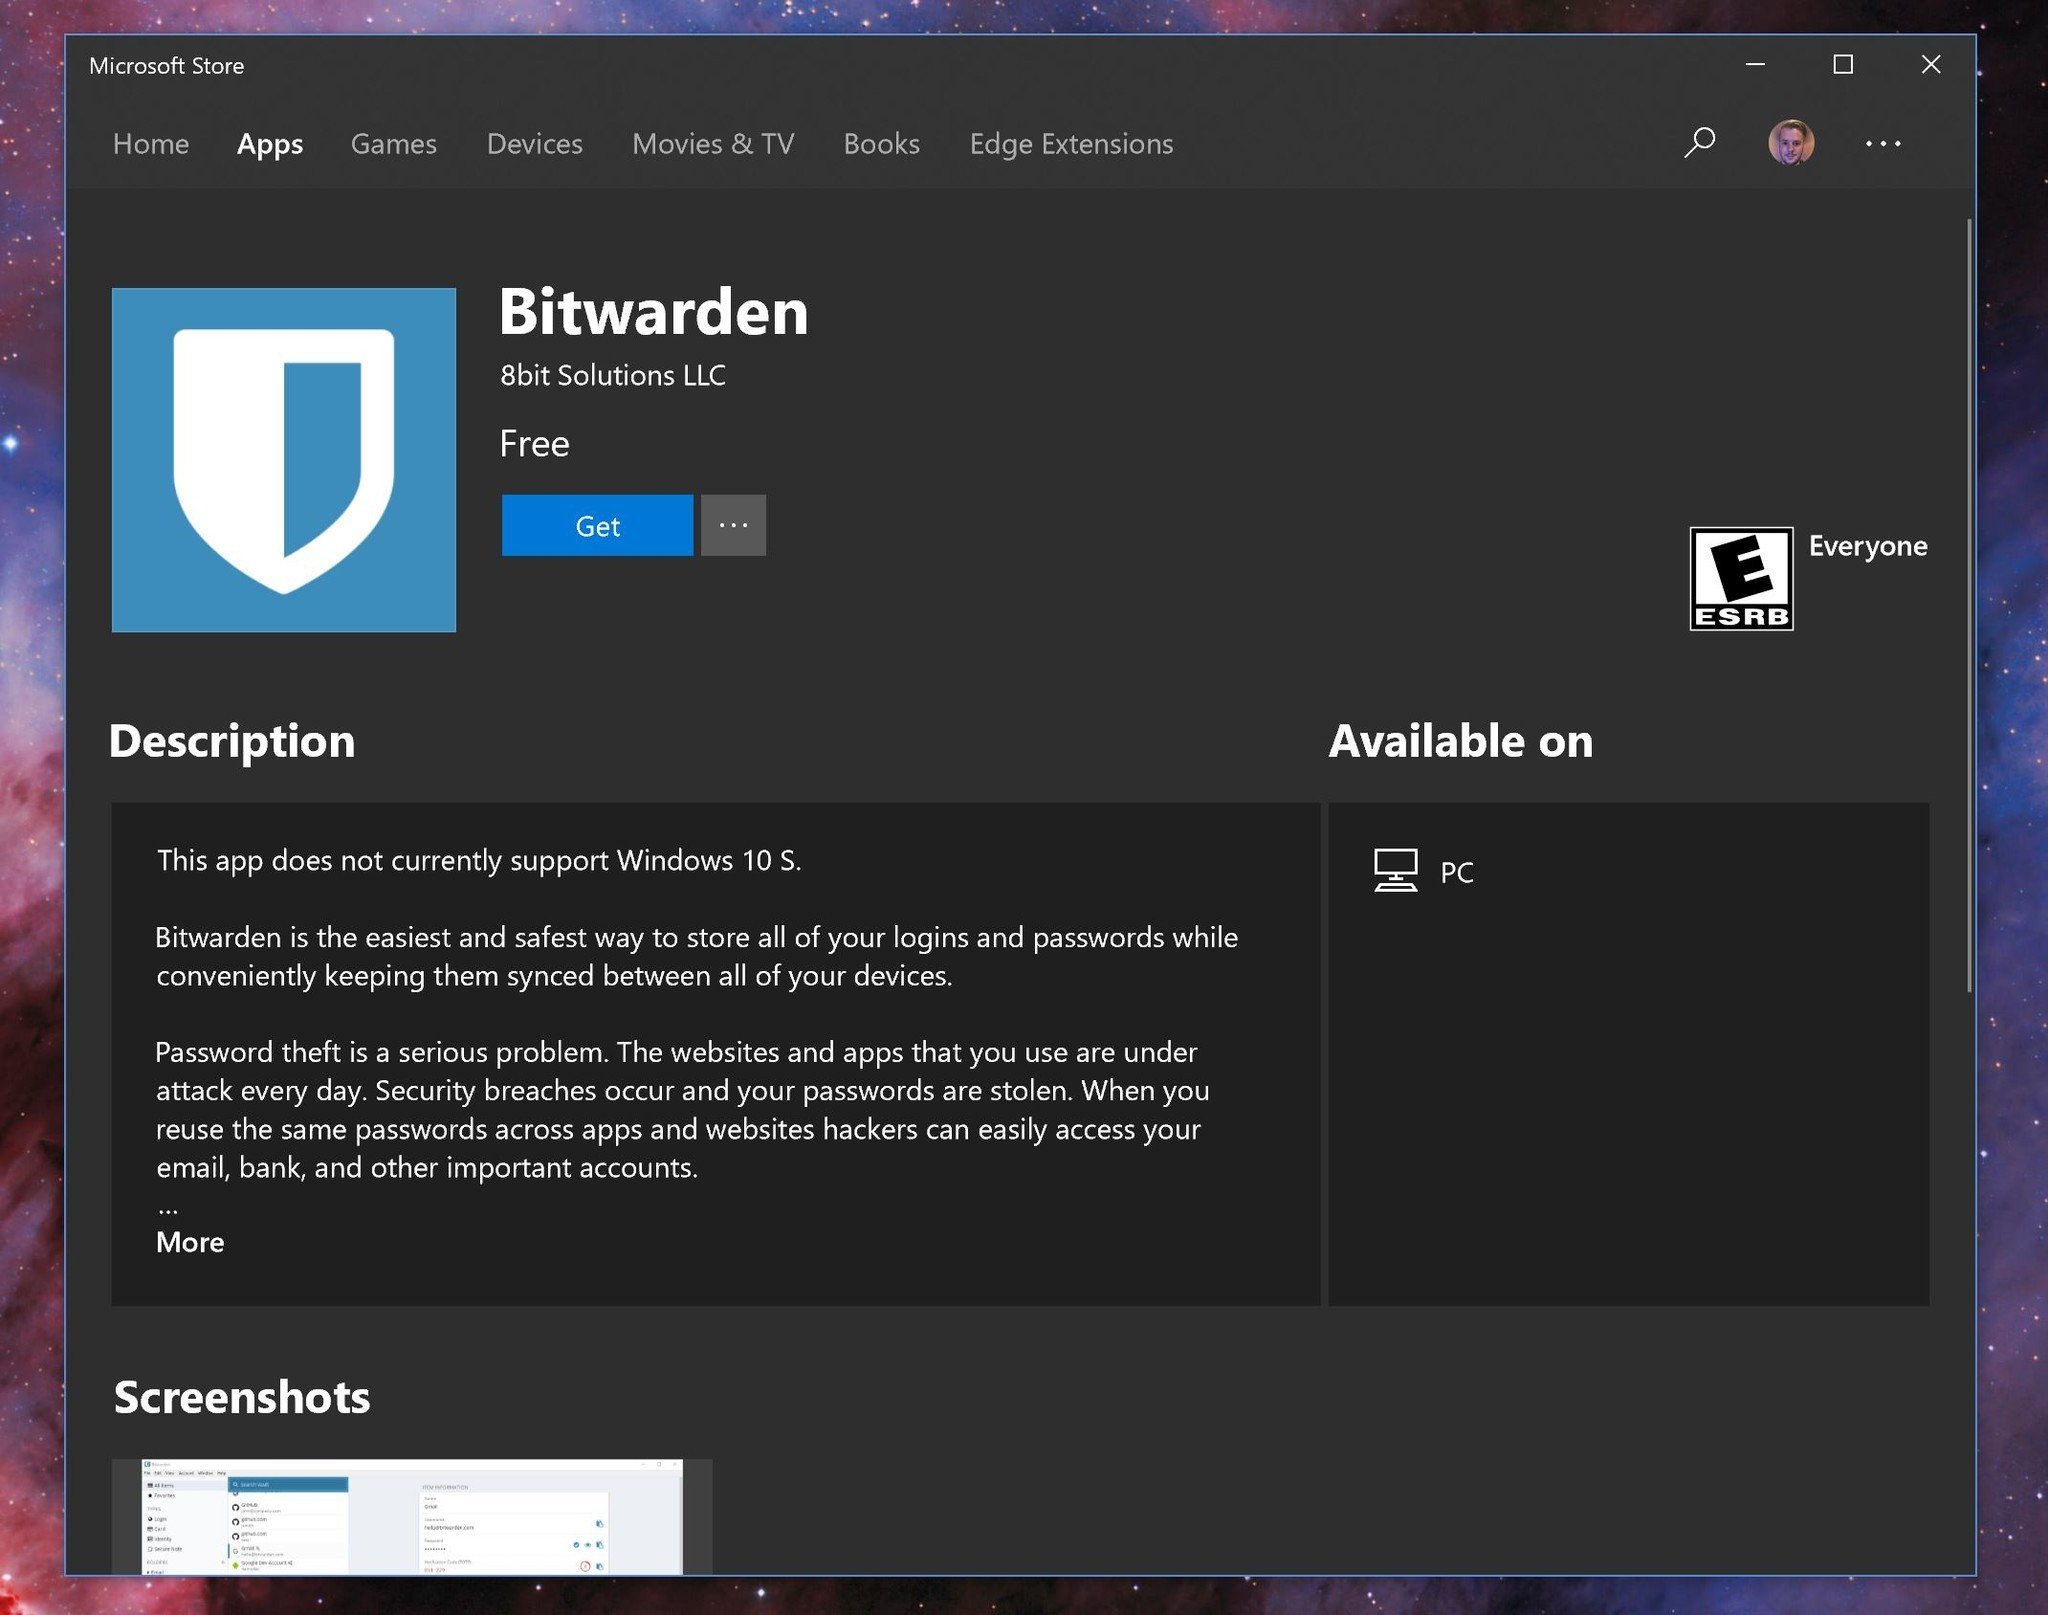 bitwarden-microsoft-store-listing.jpg